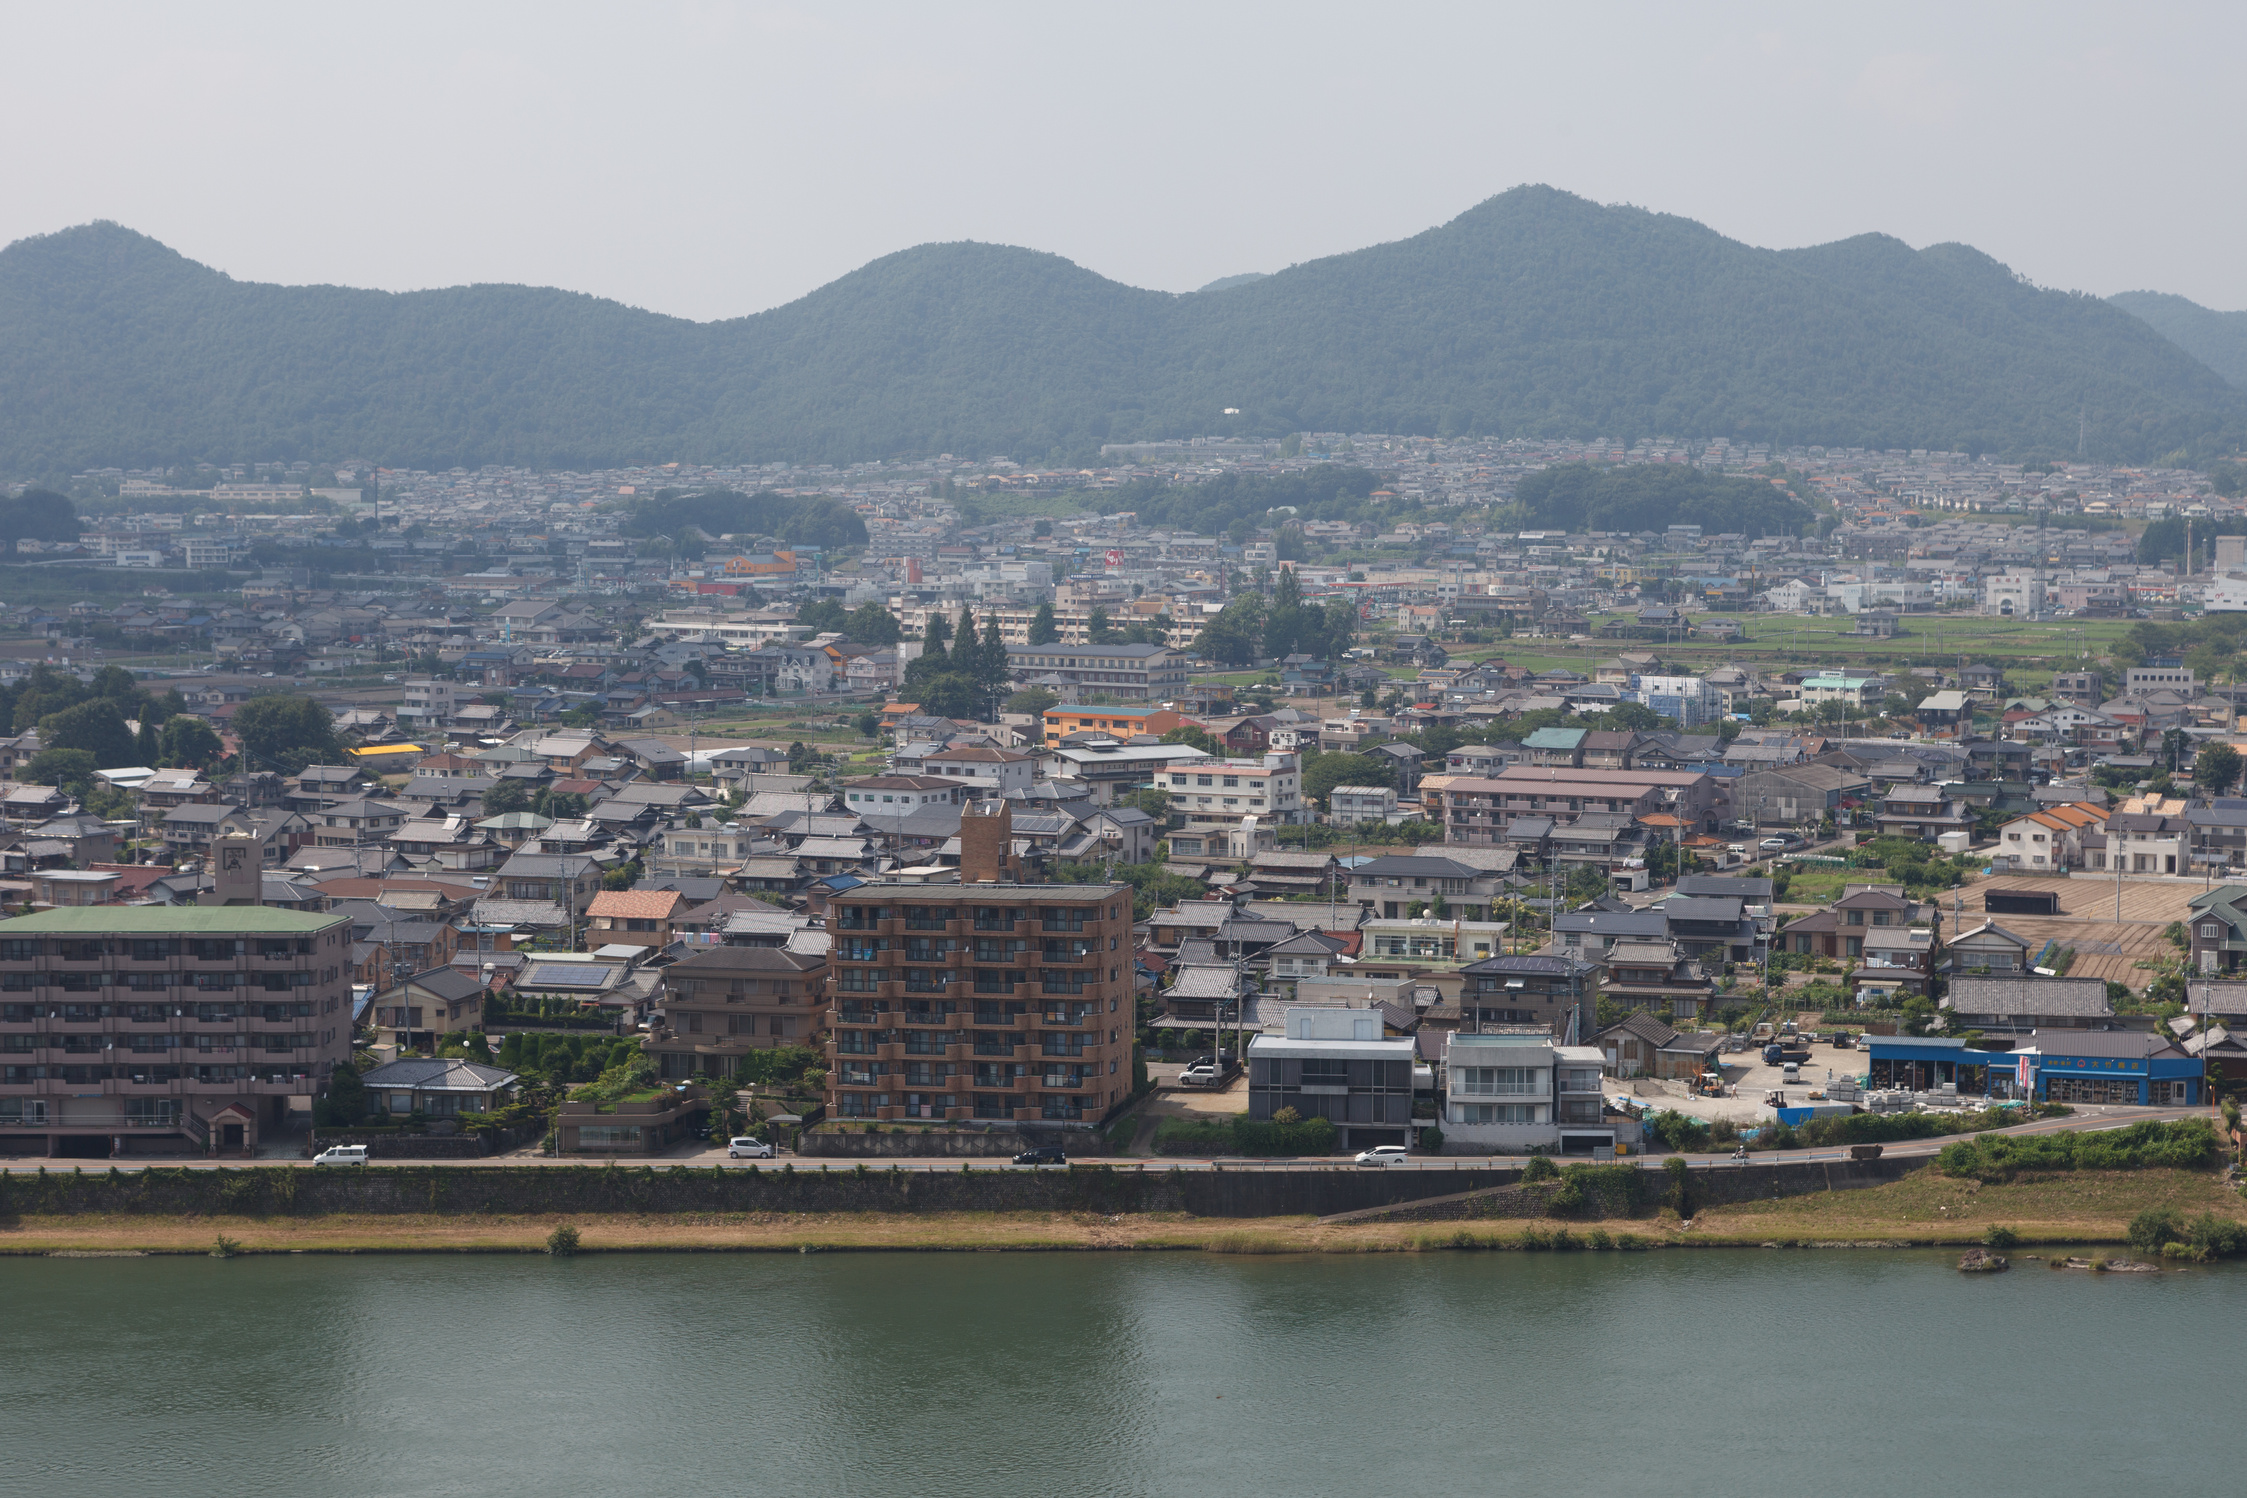 Inuyama in Aichi Prefecture, Japan